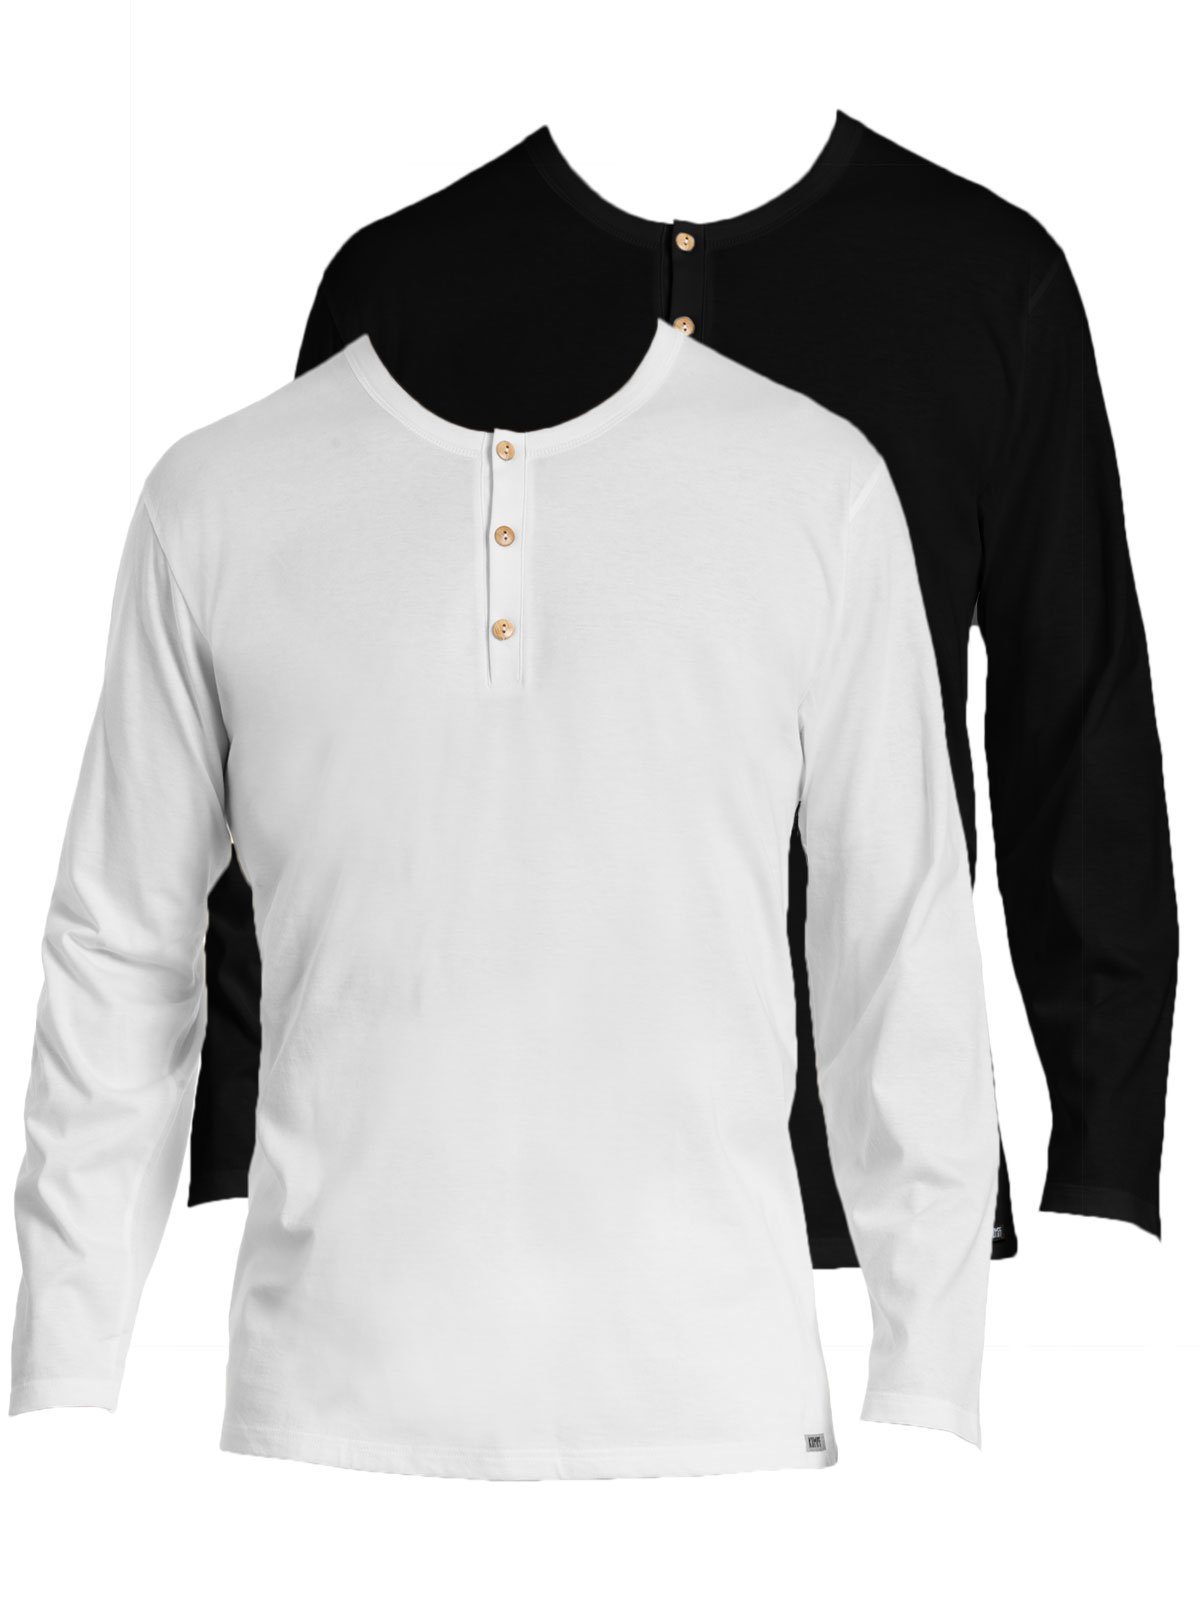 KUMPF Unterziehshirt 2er Sparpack Herren langarm Shirt Bio Cotton (Spar-Set, 2-St) hohe Markenqualität schwarz weiss